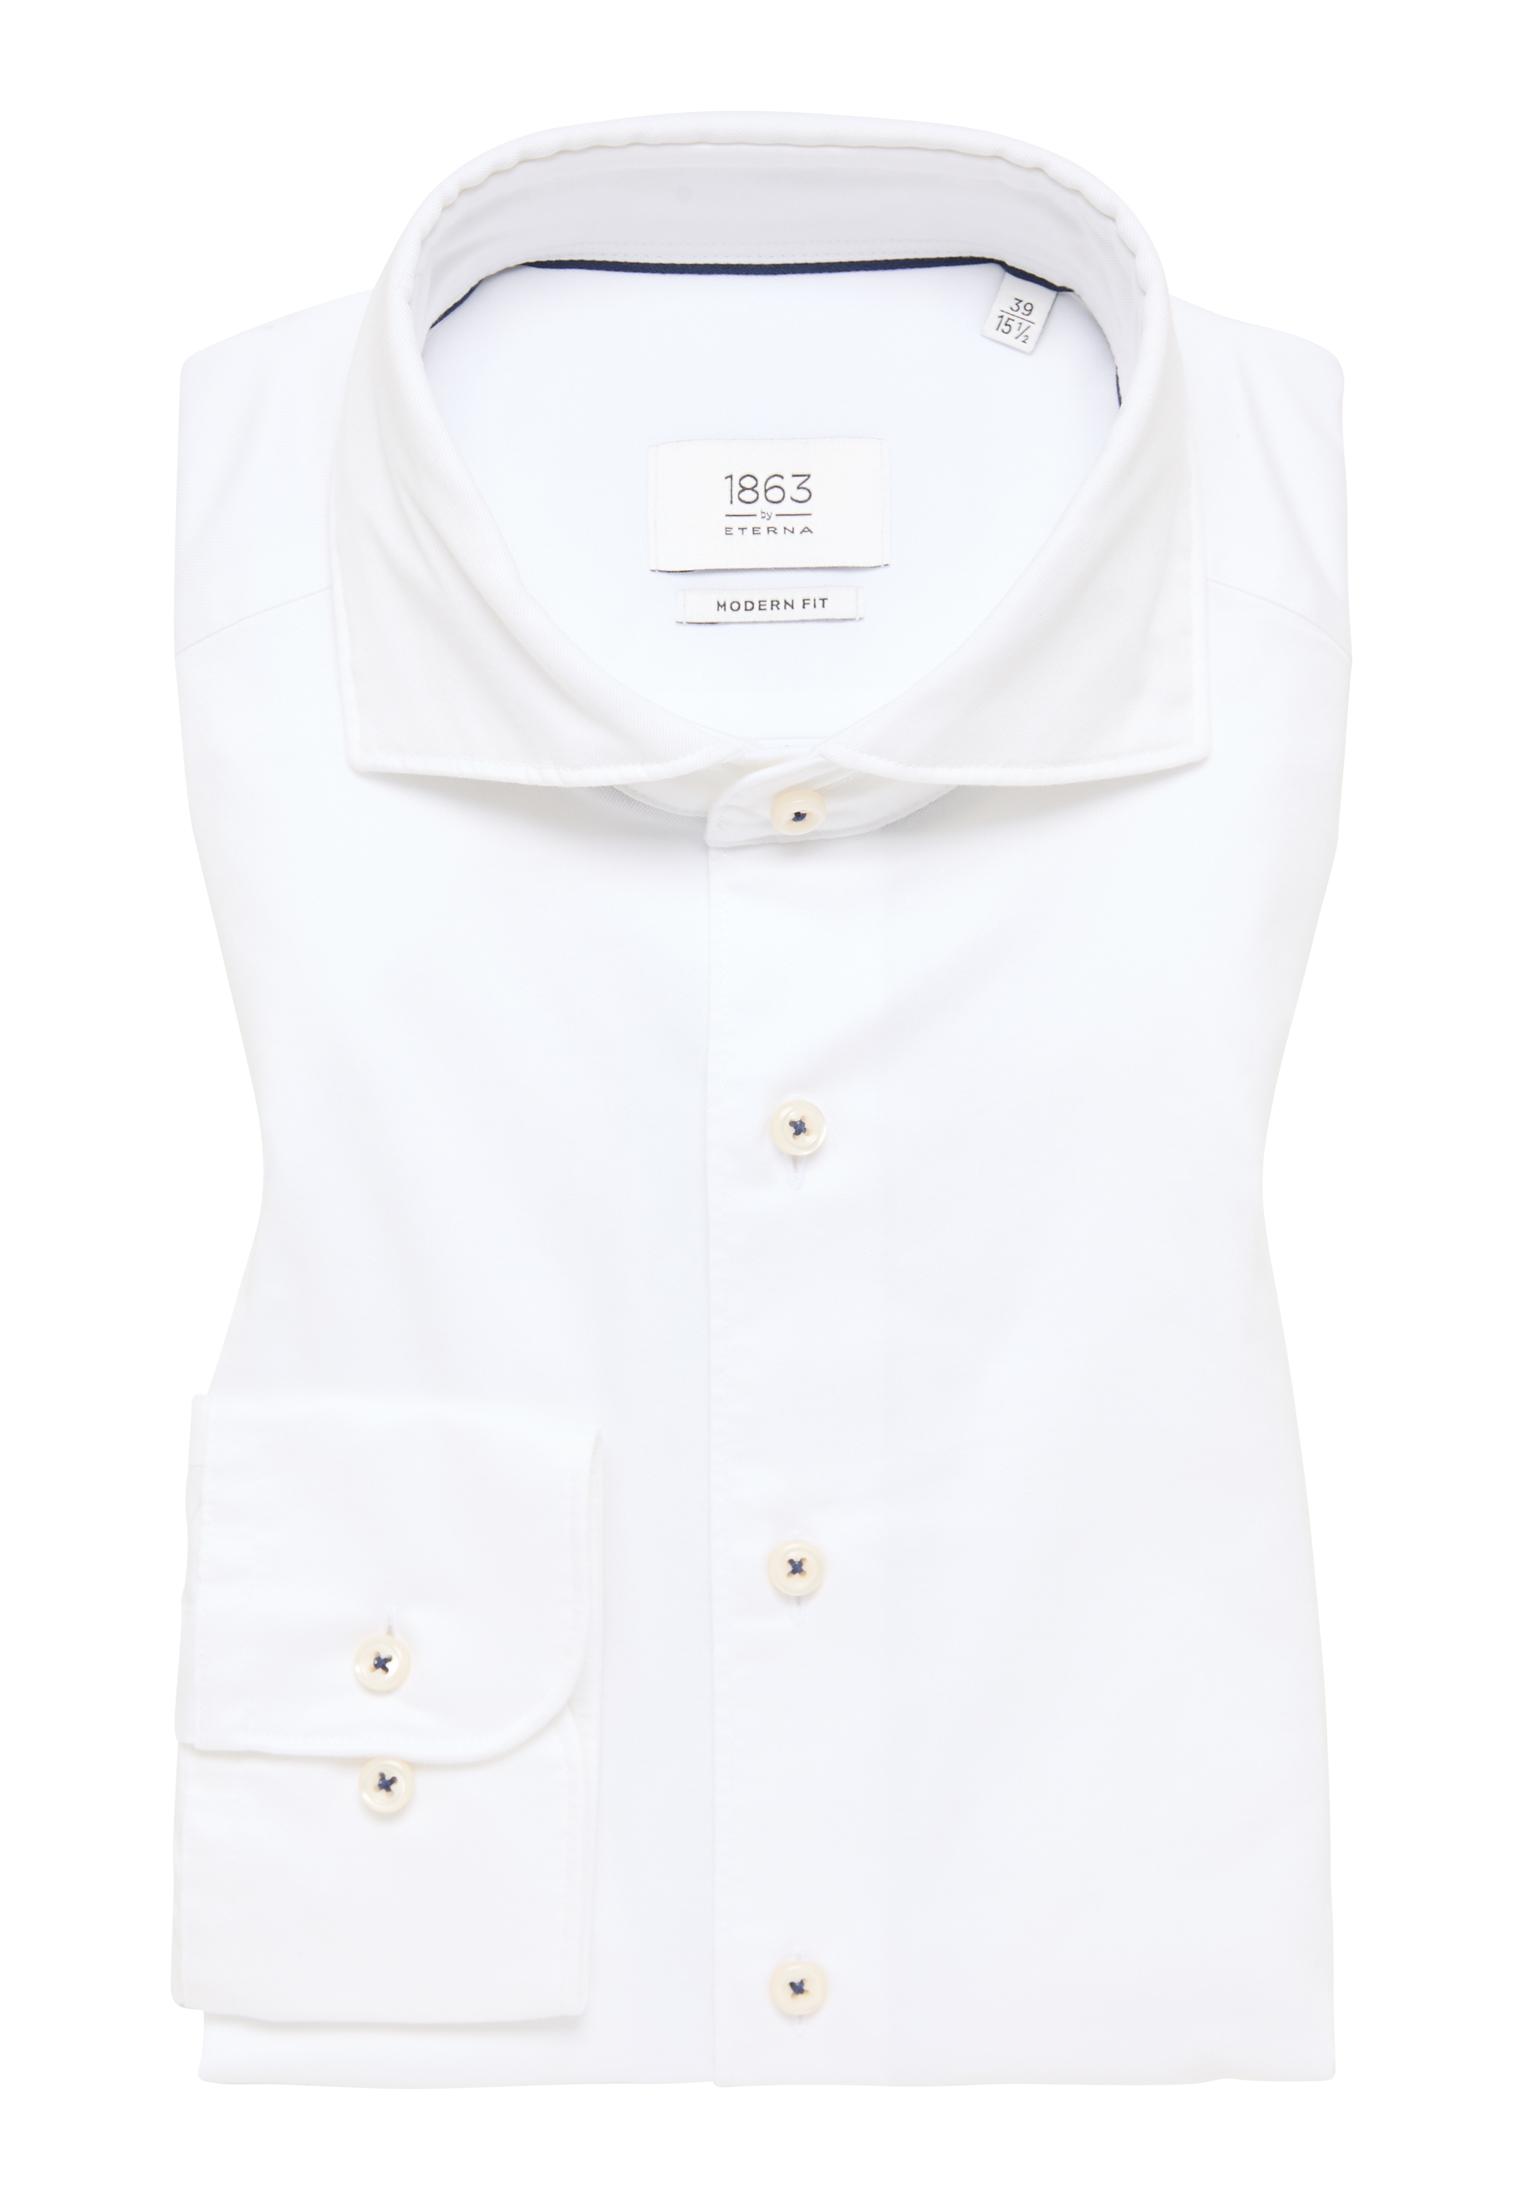 MODERN FIT Soft Luxury Shirt in off-white unifarben | off-white | 43 |  Langarm | 1SH03488-00-02-43-1/1